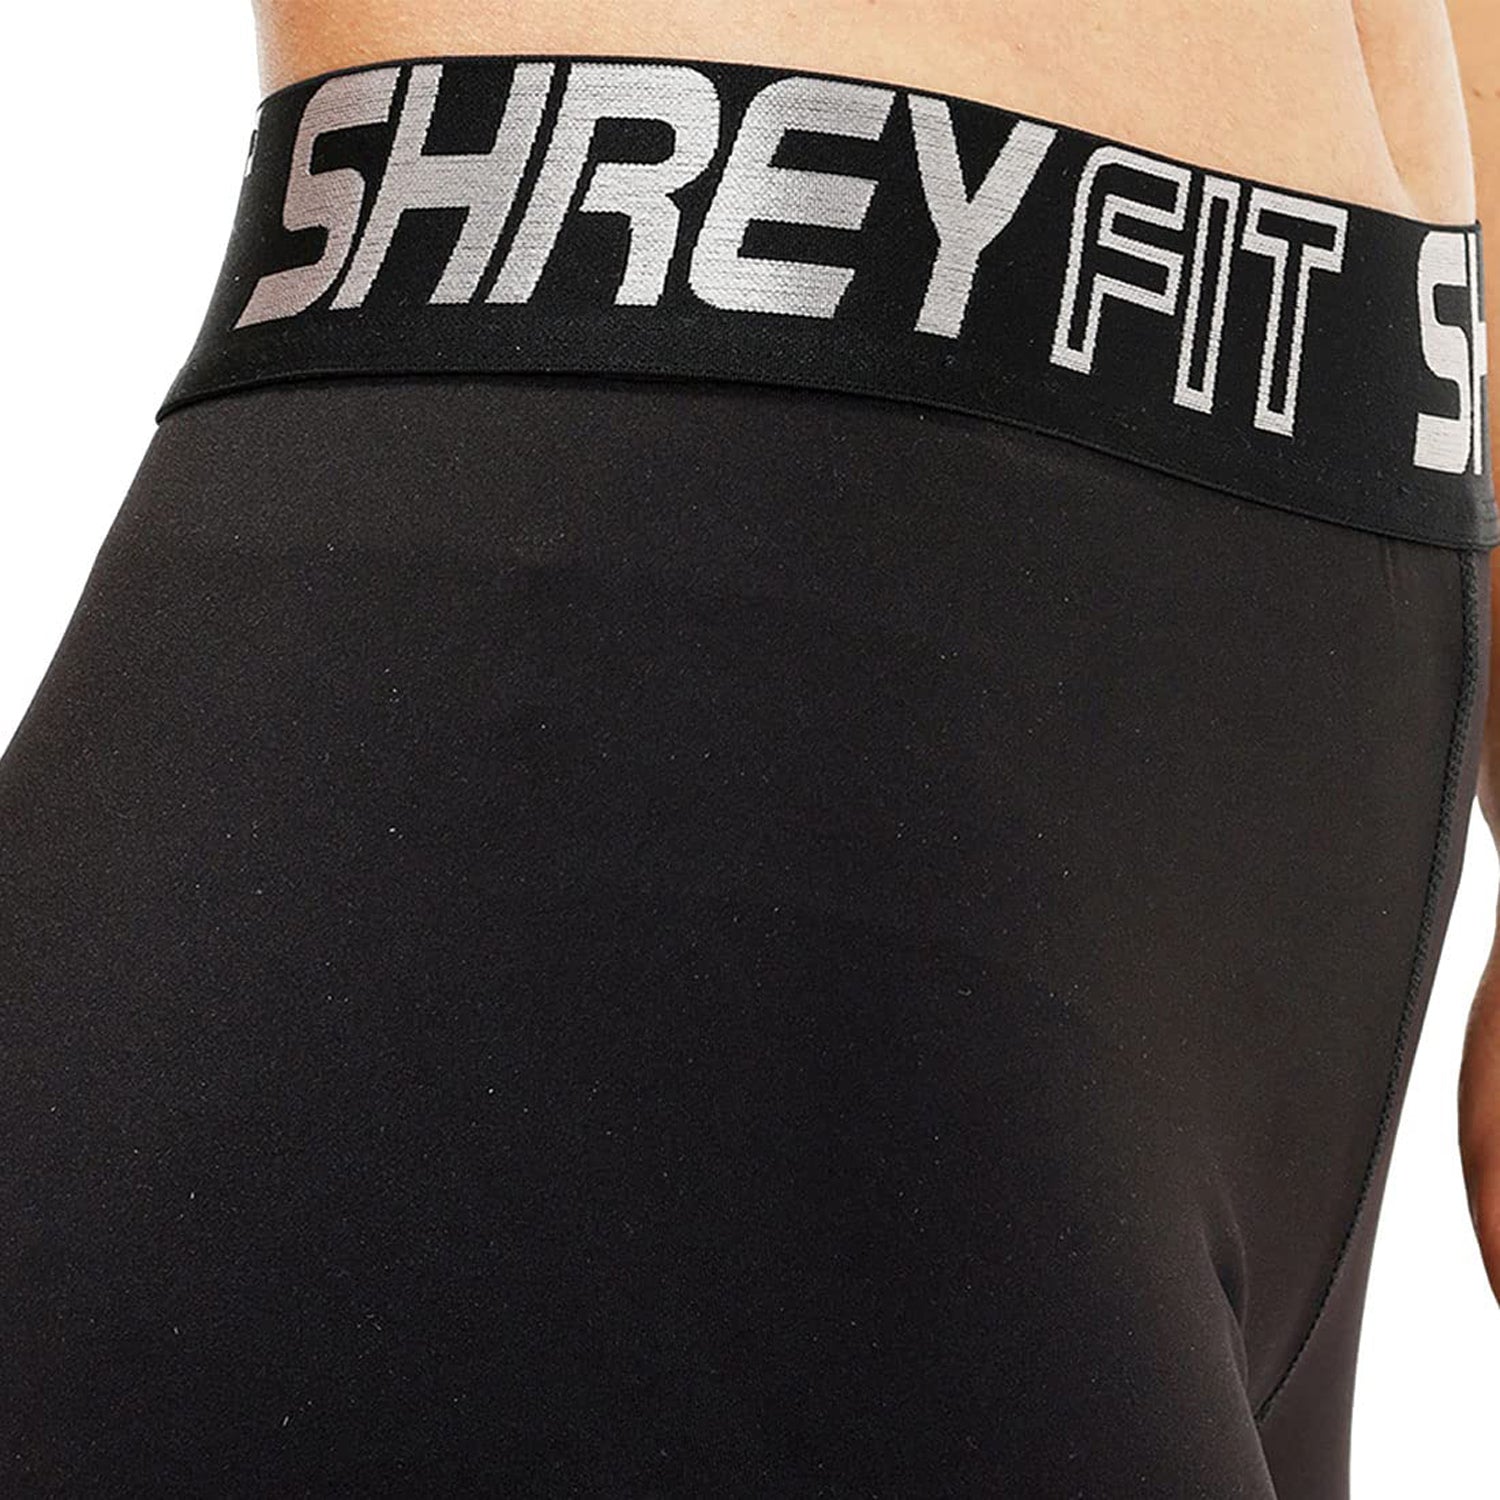 Shrey Snug Leggings, Black - Best Price online Prokicksports.com